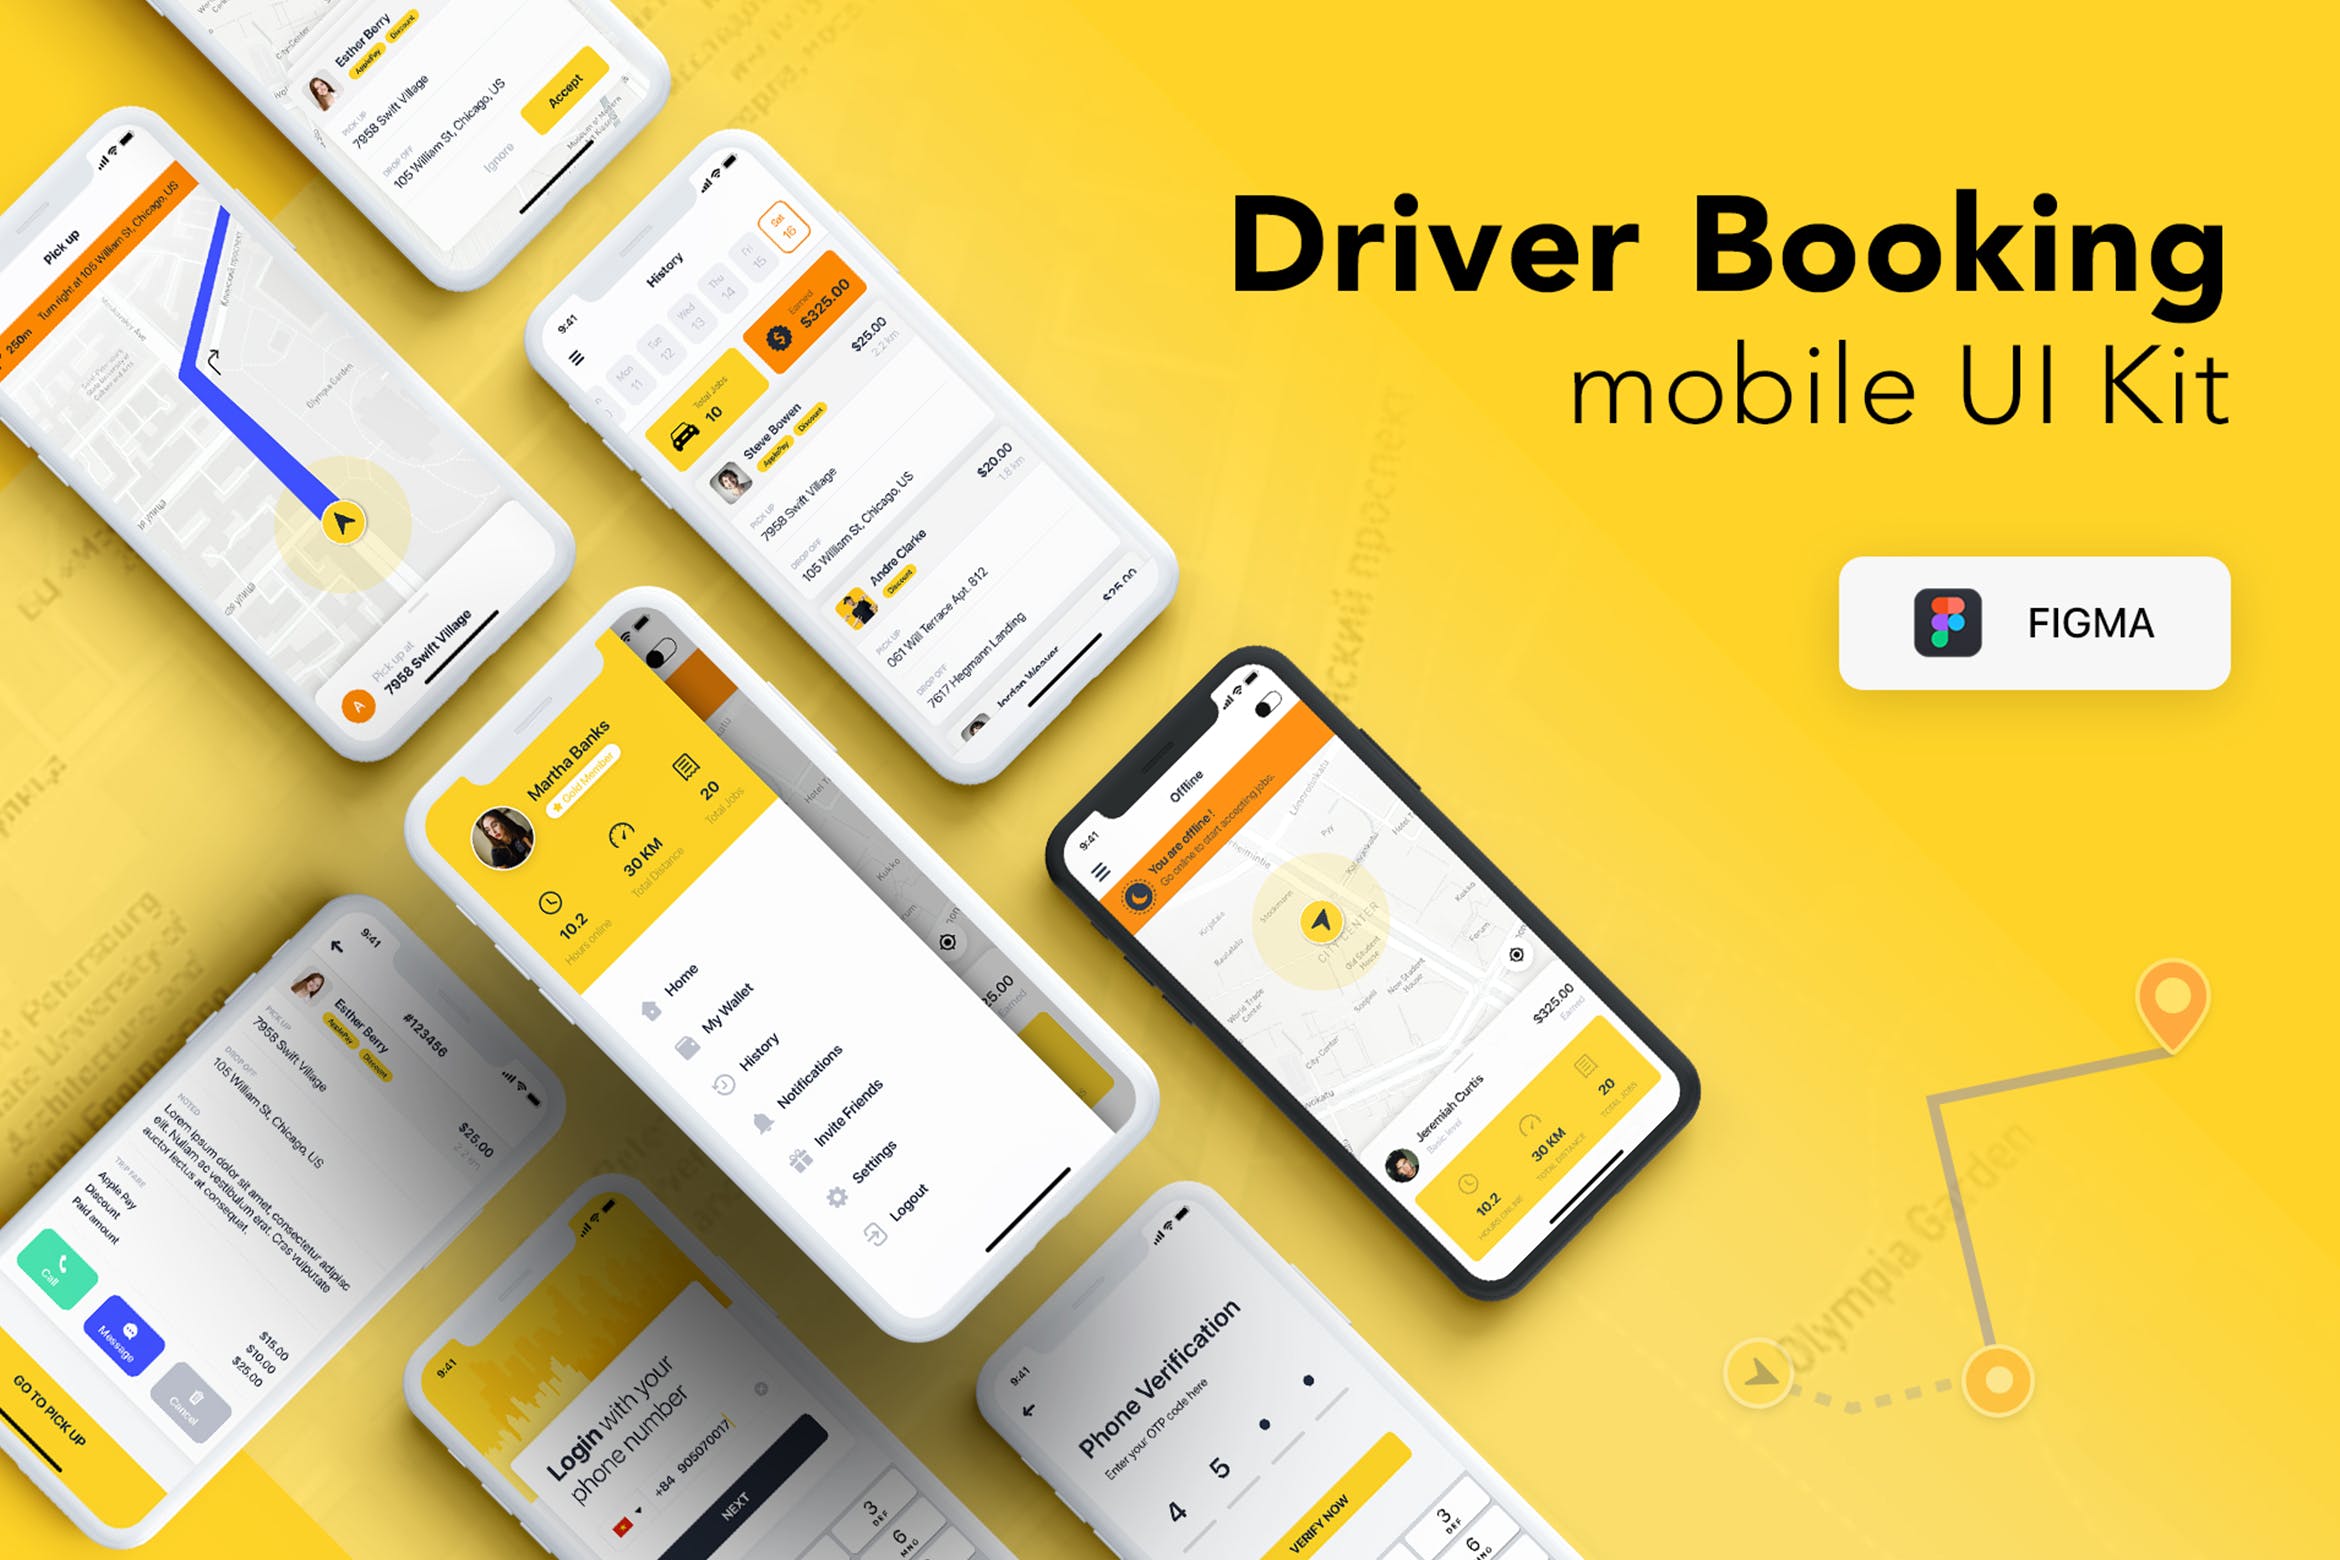 出租车/网约车/顺风车APP应用UI设计套件FIGMA模板 Taxi Driver Booking UI Kit for FIGMA插图